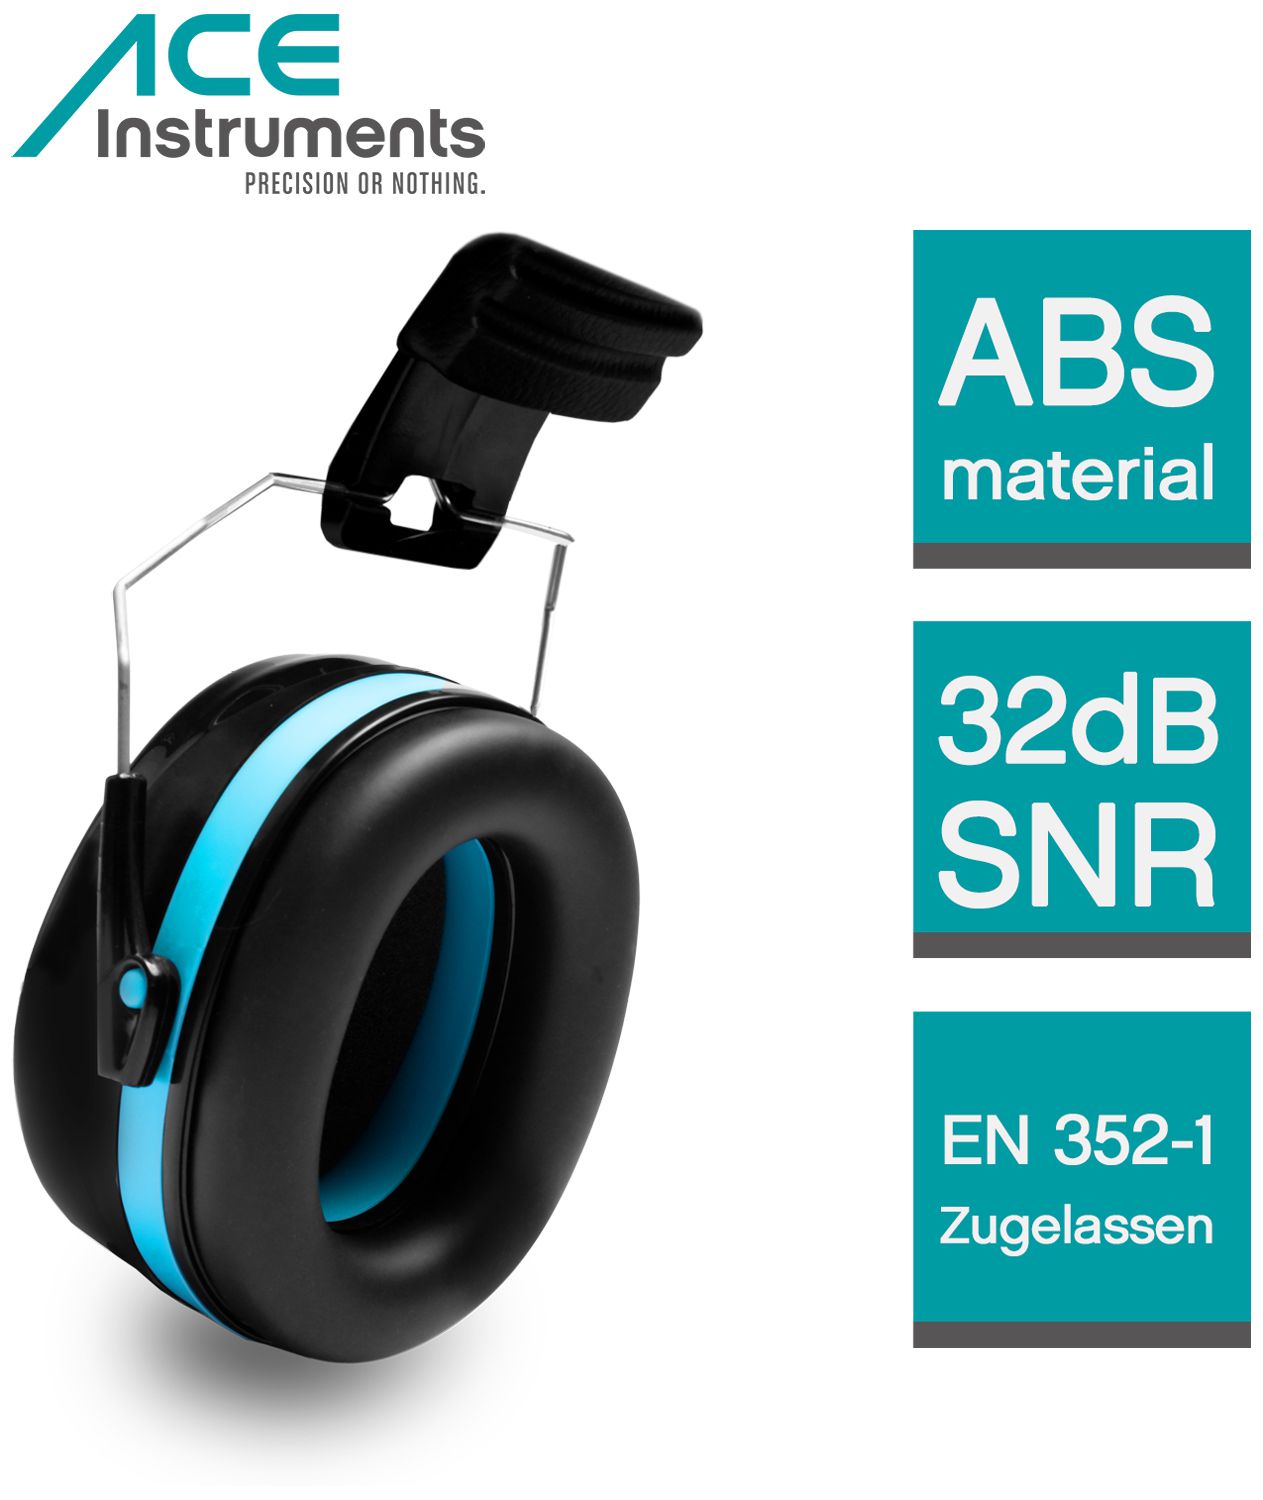 ACE Mute Kapsel-Gehörschutz - passiver Gehörschützer mit 32 dB SNR - perfekt für Bau & Industrie